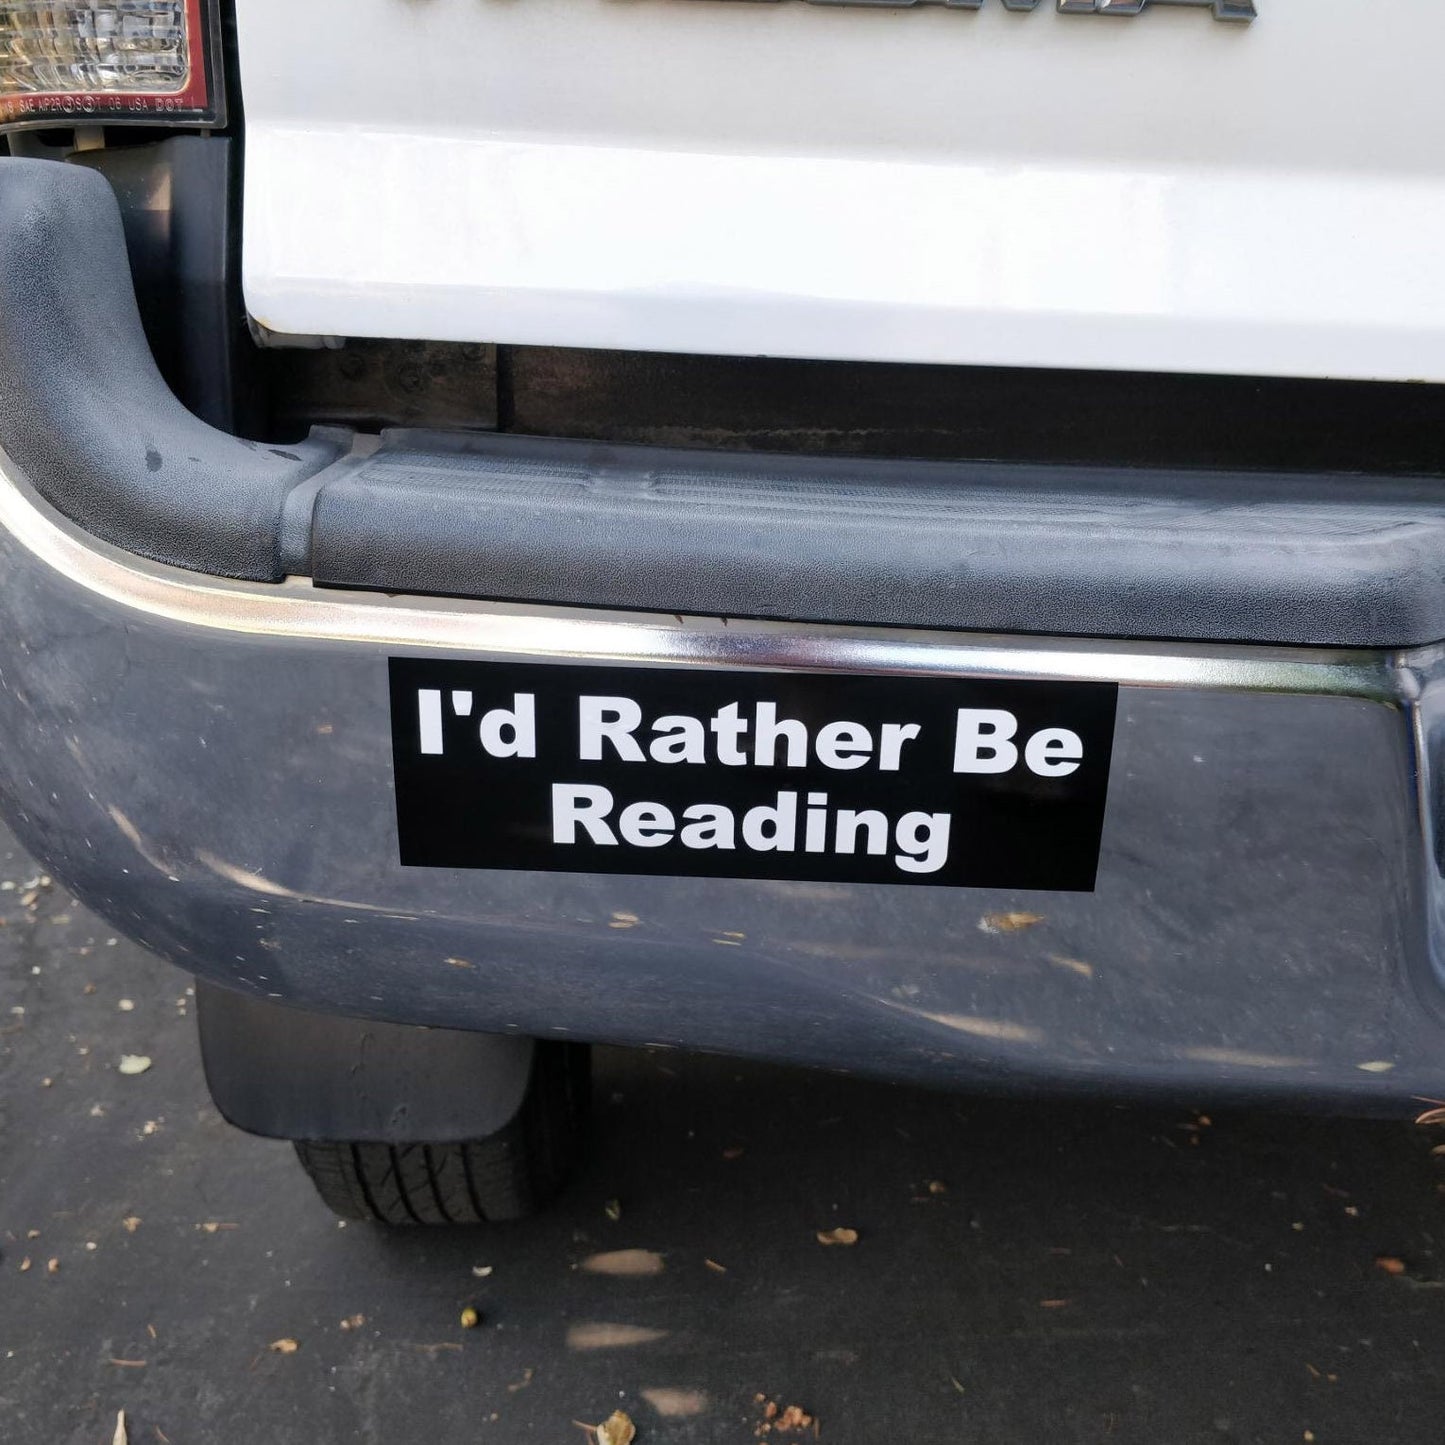 I'd Rather Be _____ Bumper Sticker